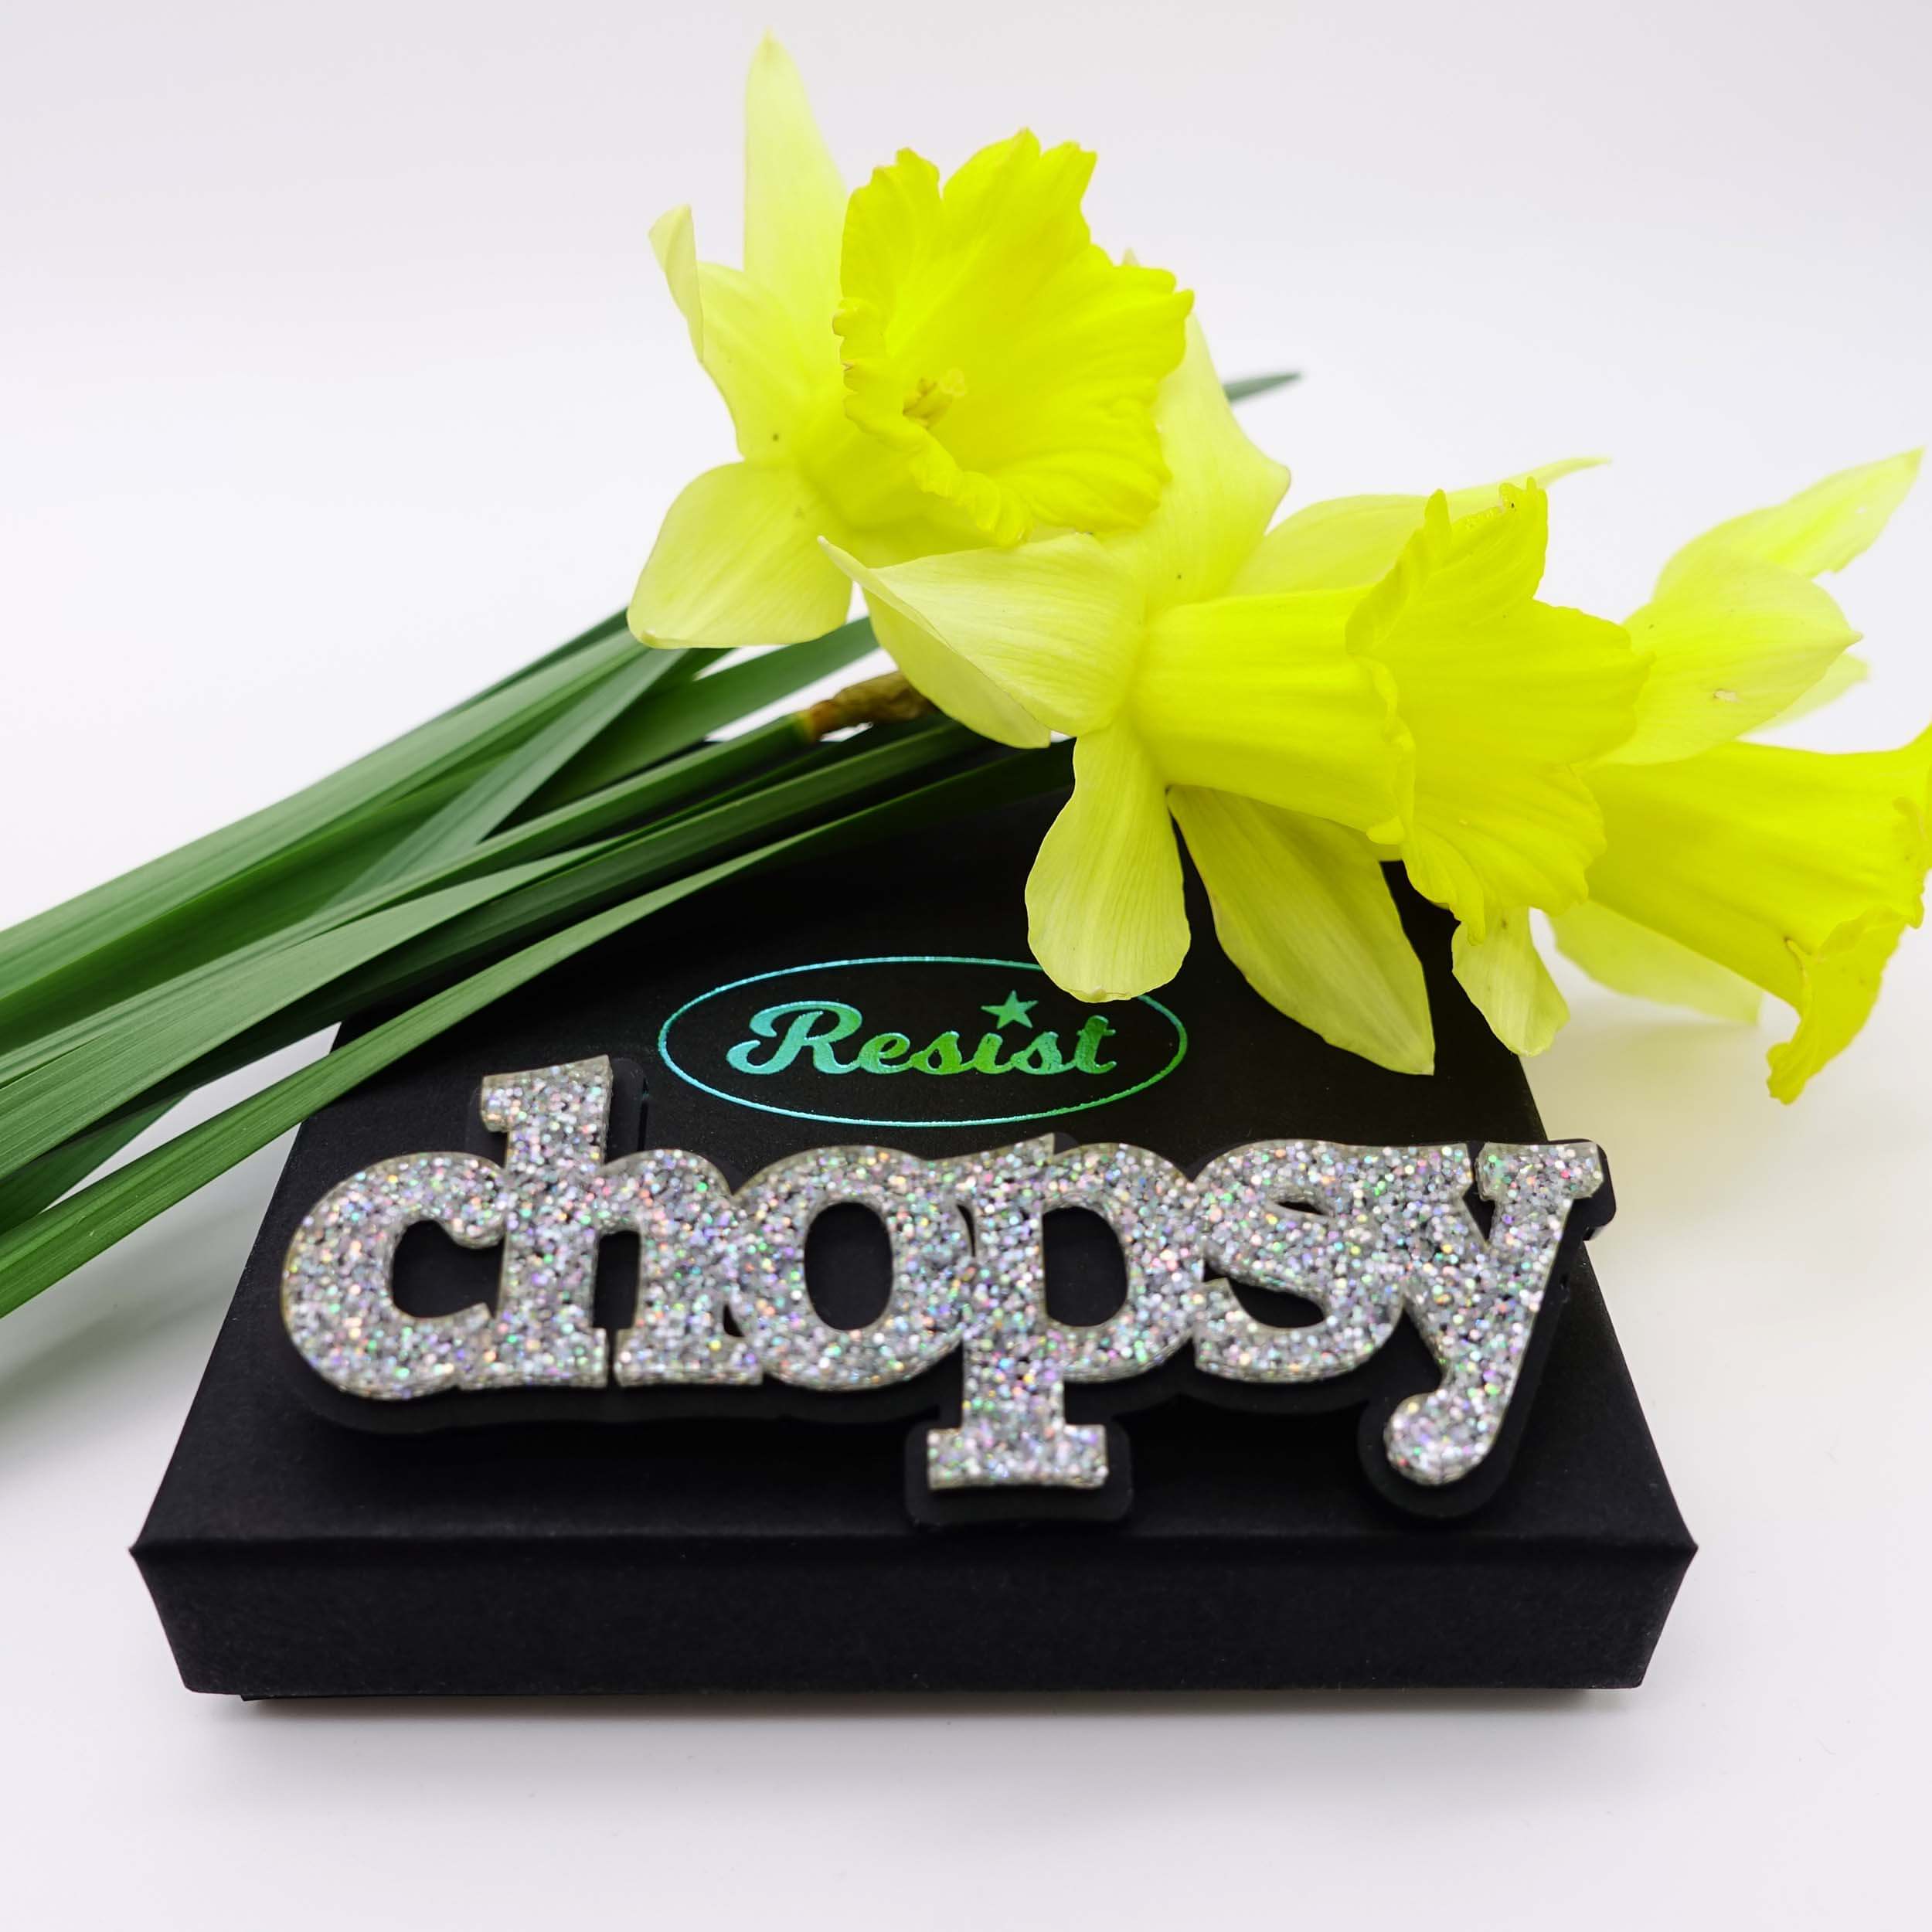 An iridescent silver glitter Chopsy brooch designed by Sarah Day for Wear and Resist, shown on a gift box with daffodils. £2 goes to Welsh Women's Aid. Fel yr arfer, mae £2 o bob mwclus Chopsy yn mynd at @welshwomensaid.